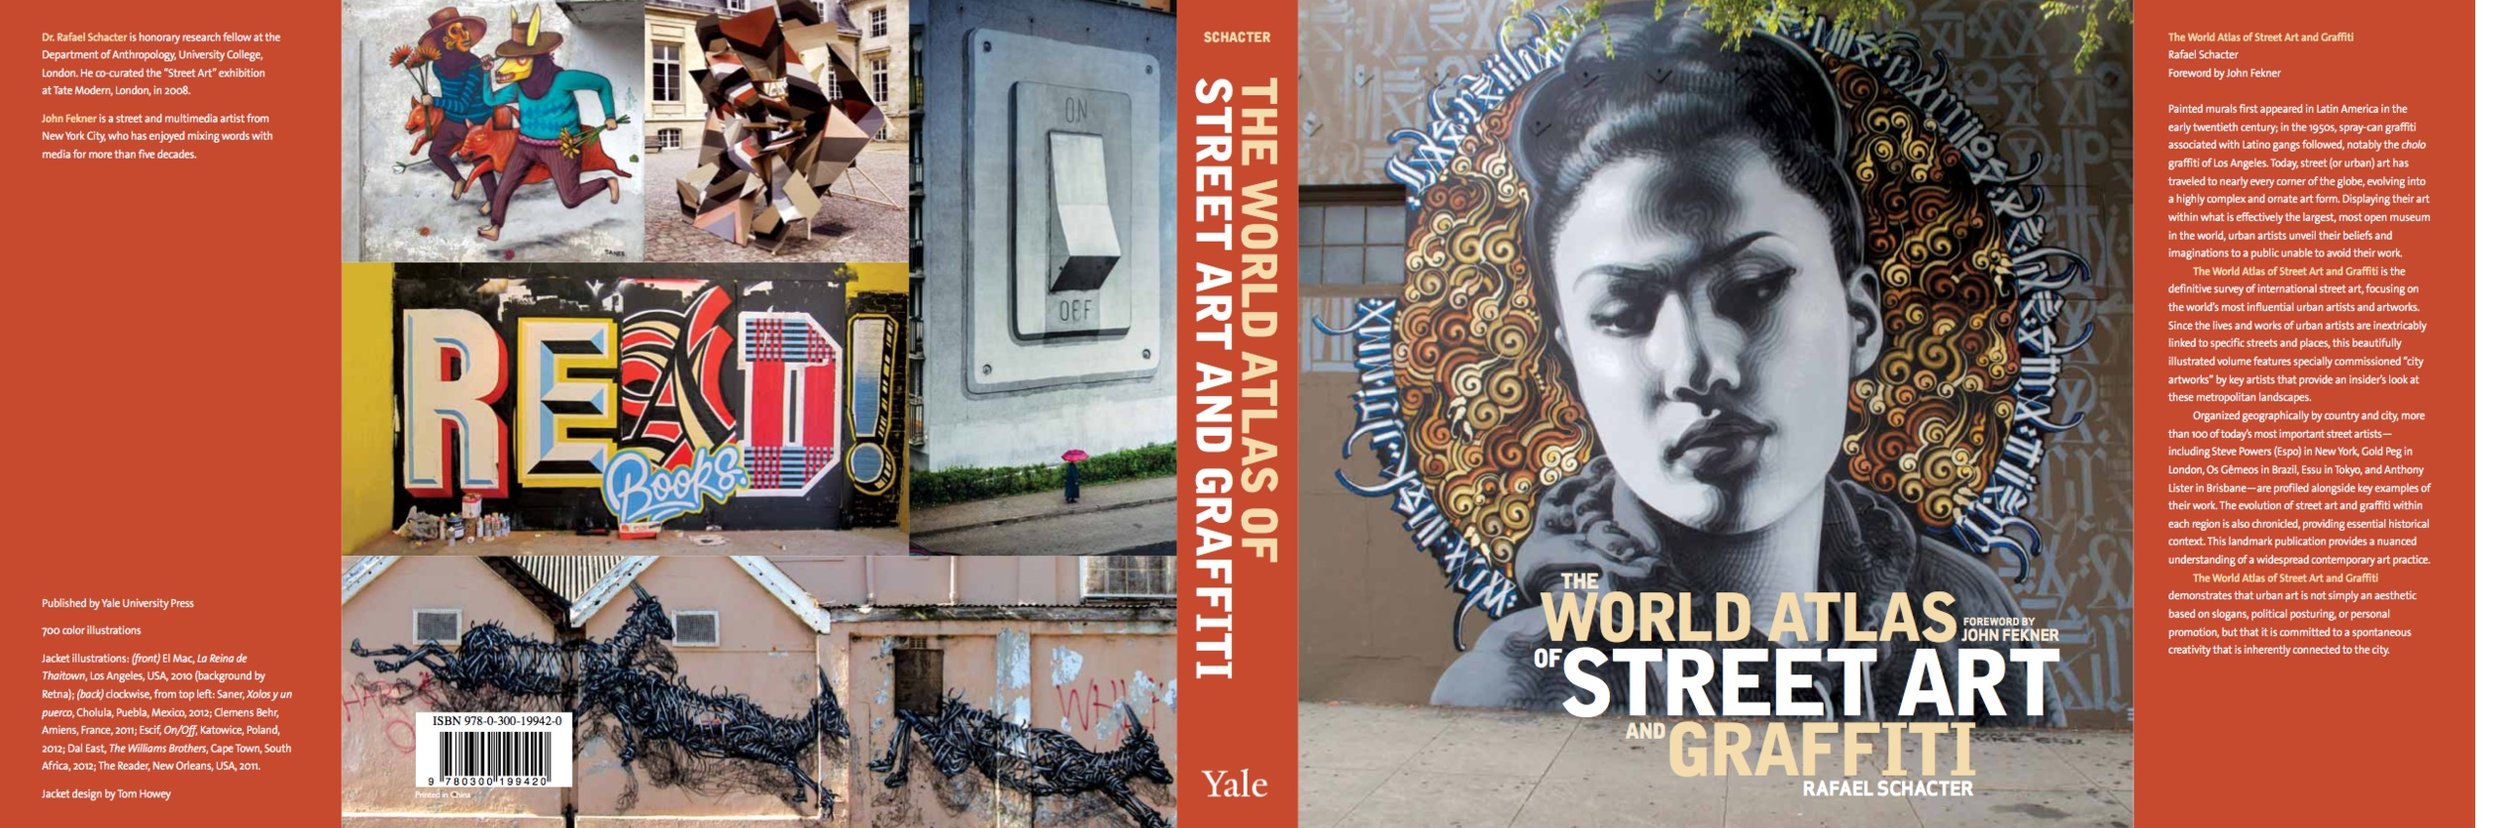 The World Atlas of Street Art and Graffiti, 2013 (Yale UP)